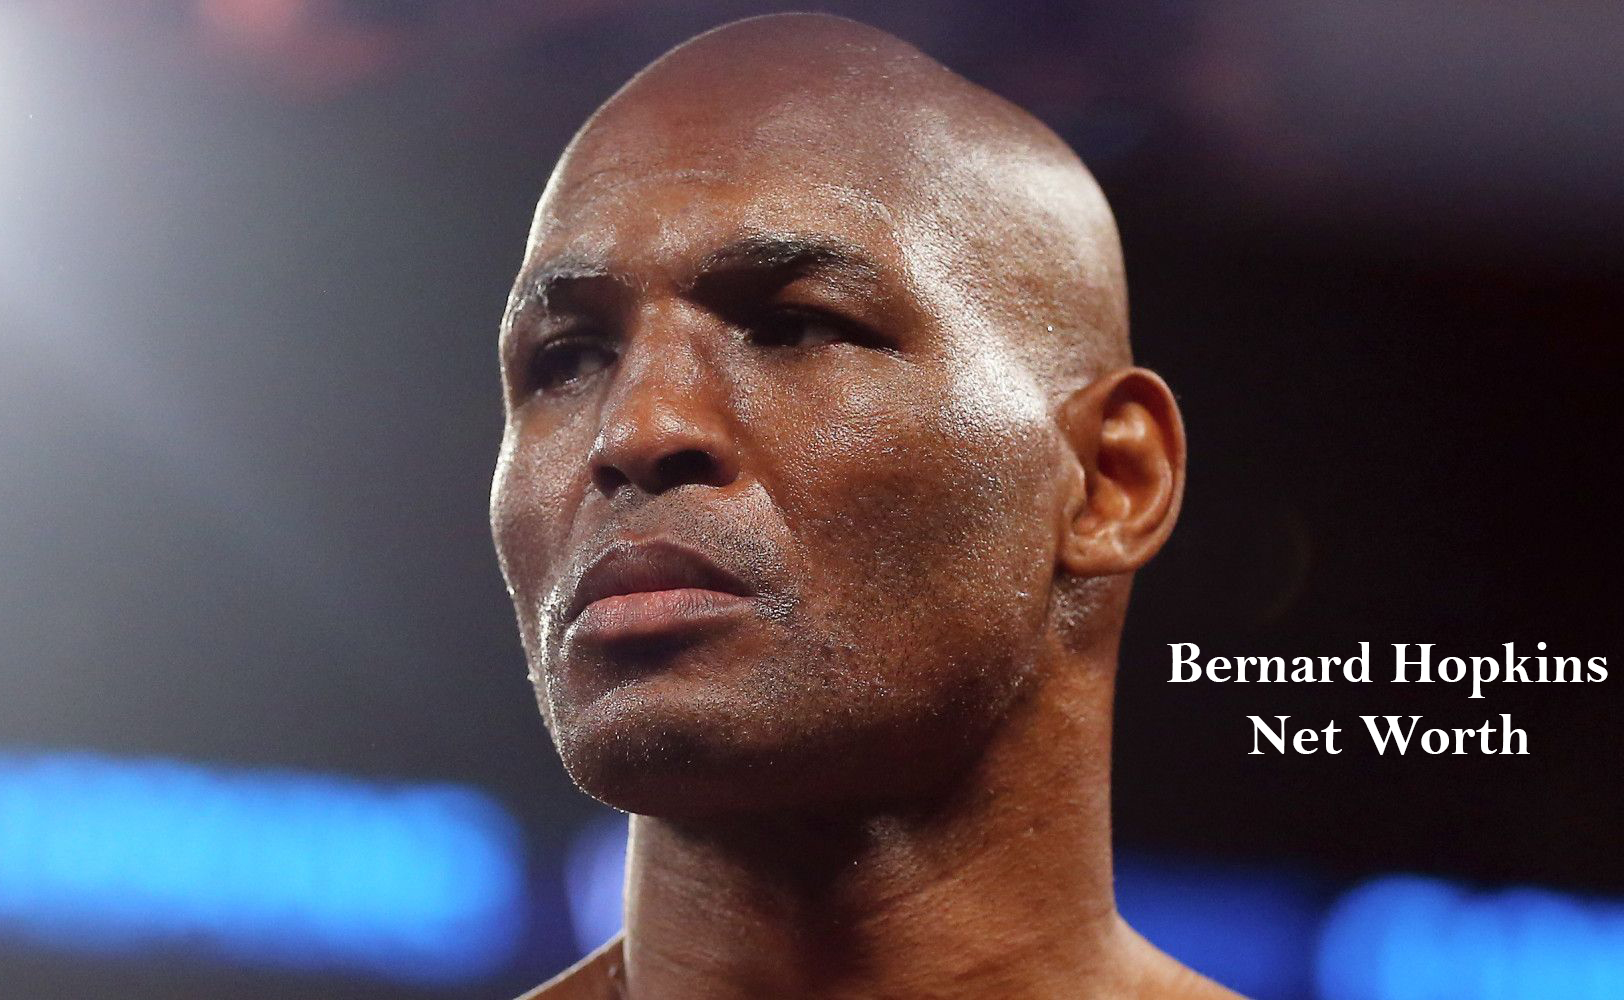 Bernard Hopkins Net Worth 2020 As a Professional ExAmerican Boxer